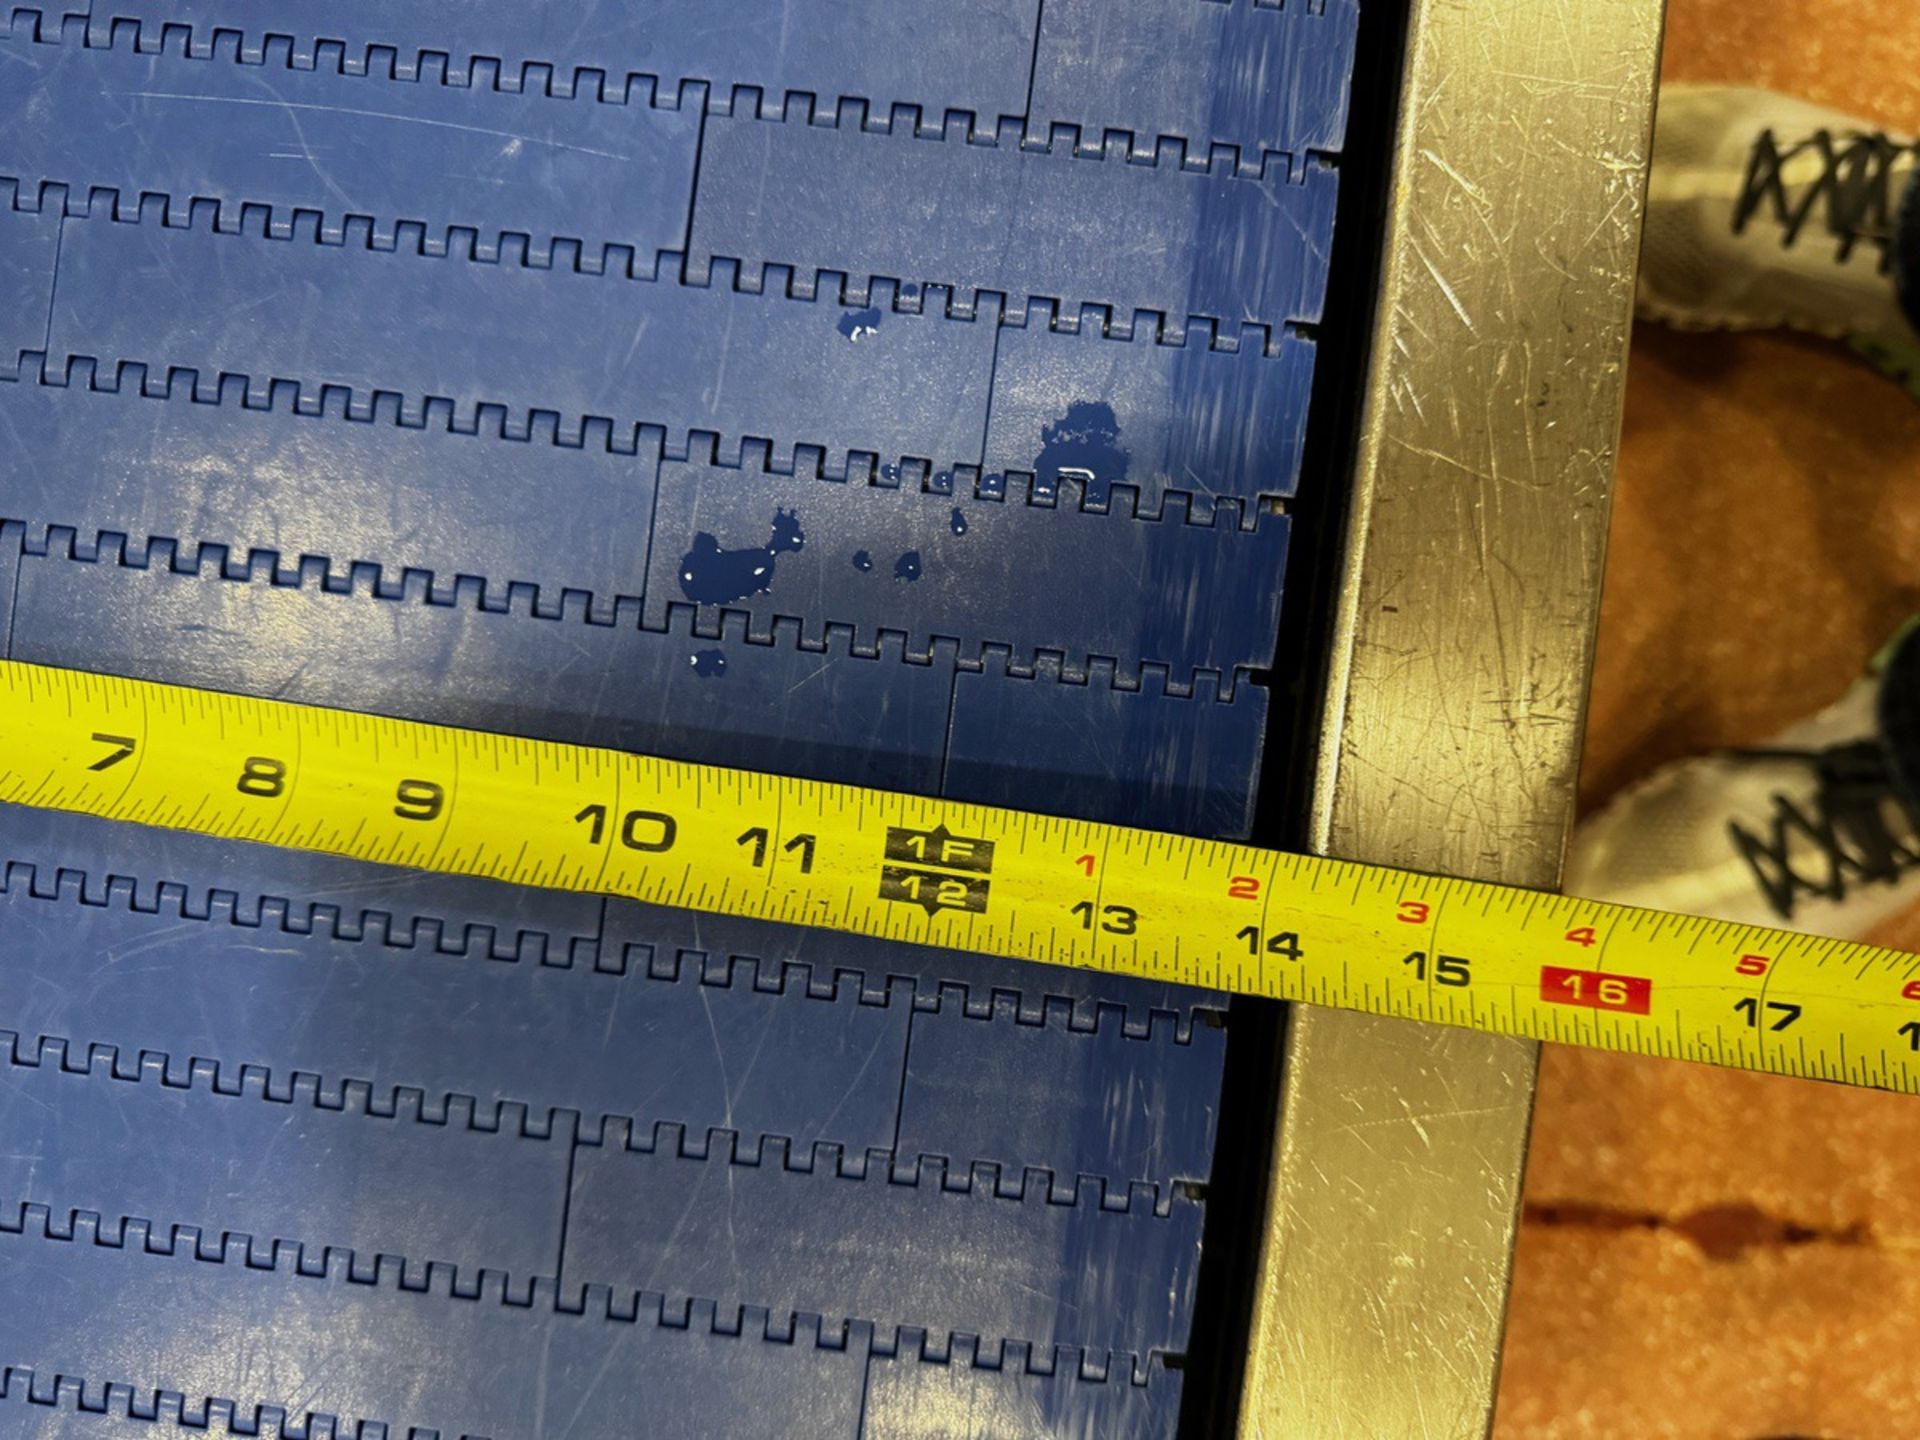 Stainless Steel Frame Conveyor, 14"W x 93" OA Length - Image 3 of 4